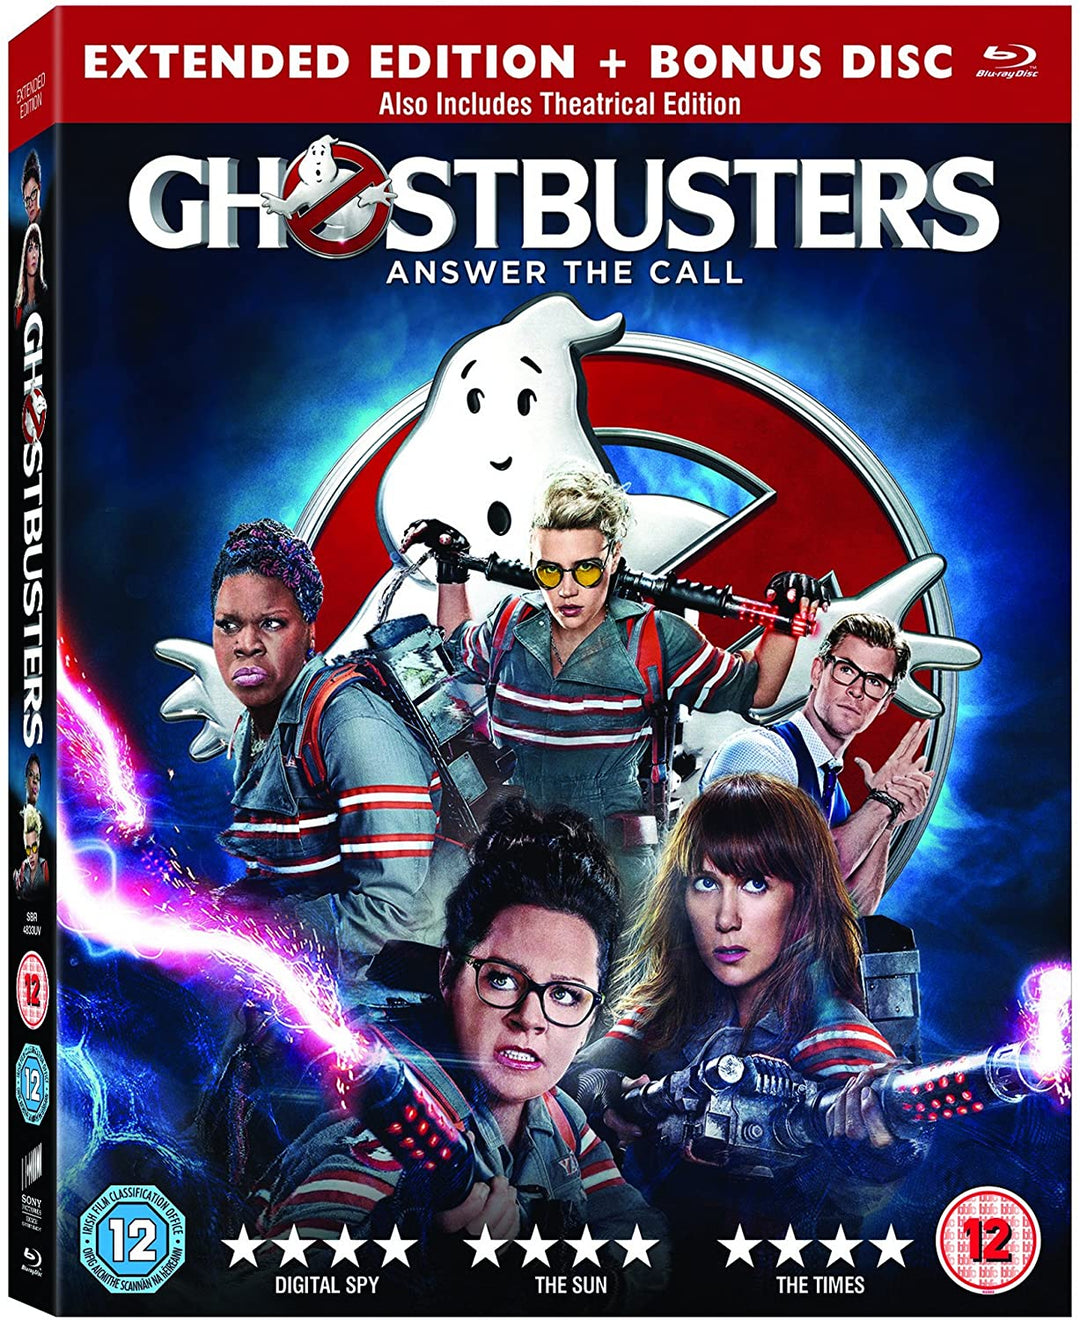 Ghostbusters [Blu-ray] [2016] [Region Free]